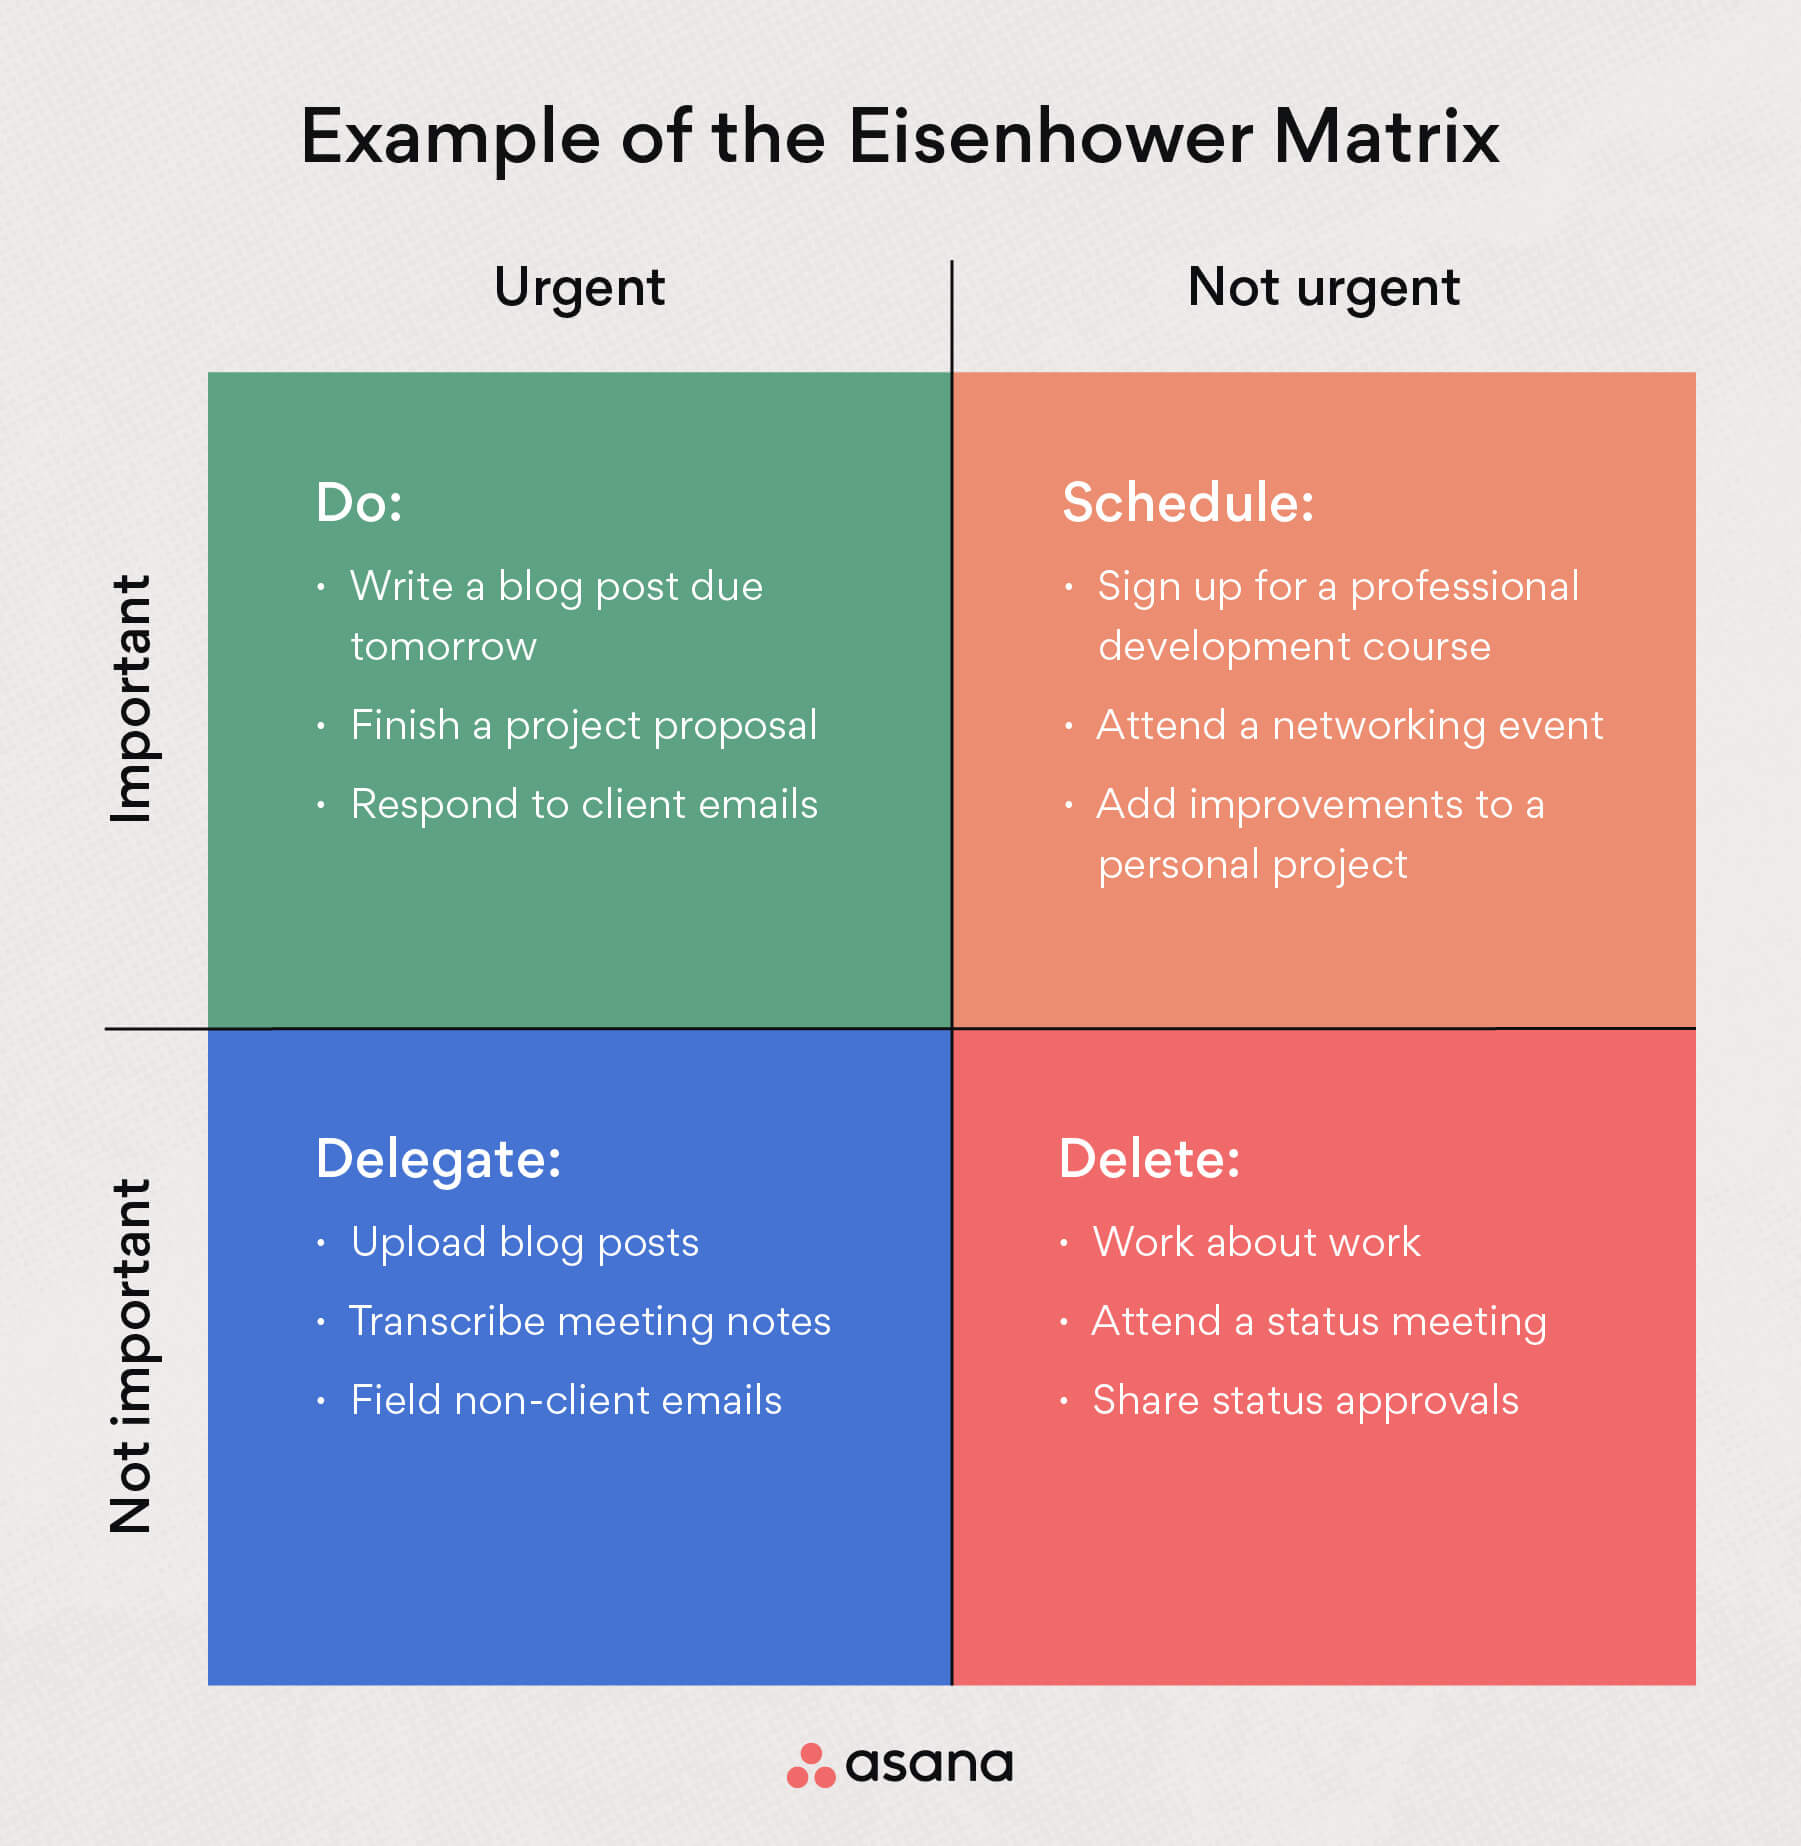 Eisenhower Matrix example